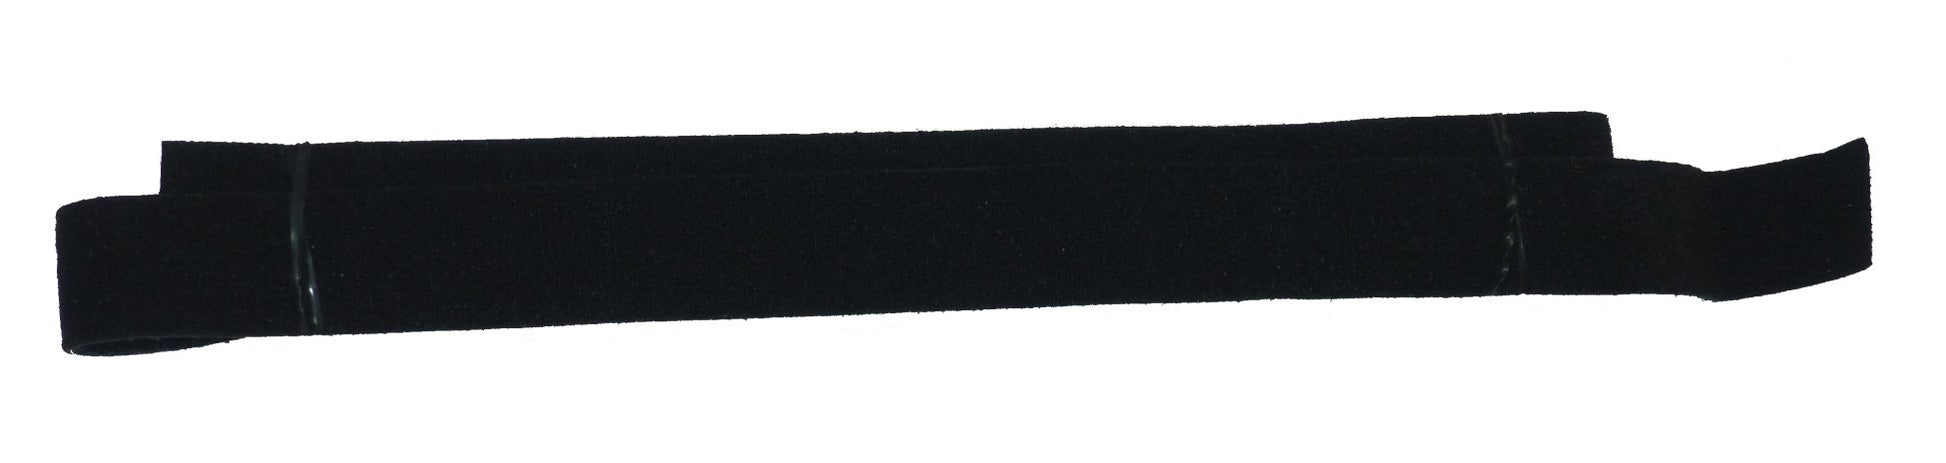 Benristraps 25mm back-back hook and loop tape (5 metre roll) (3)